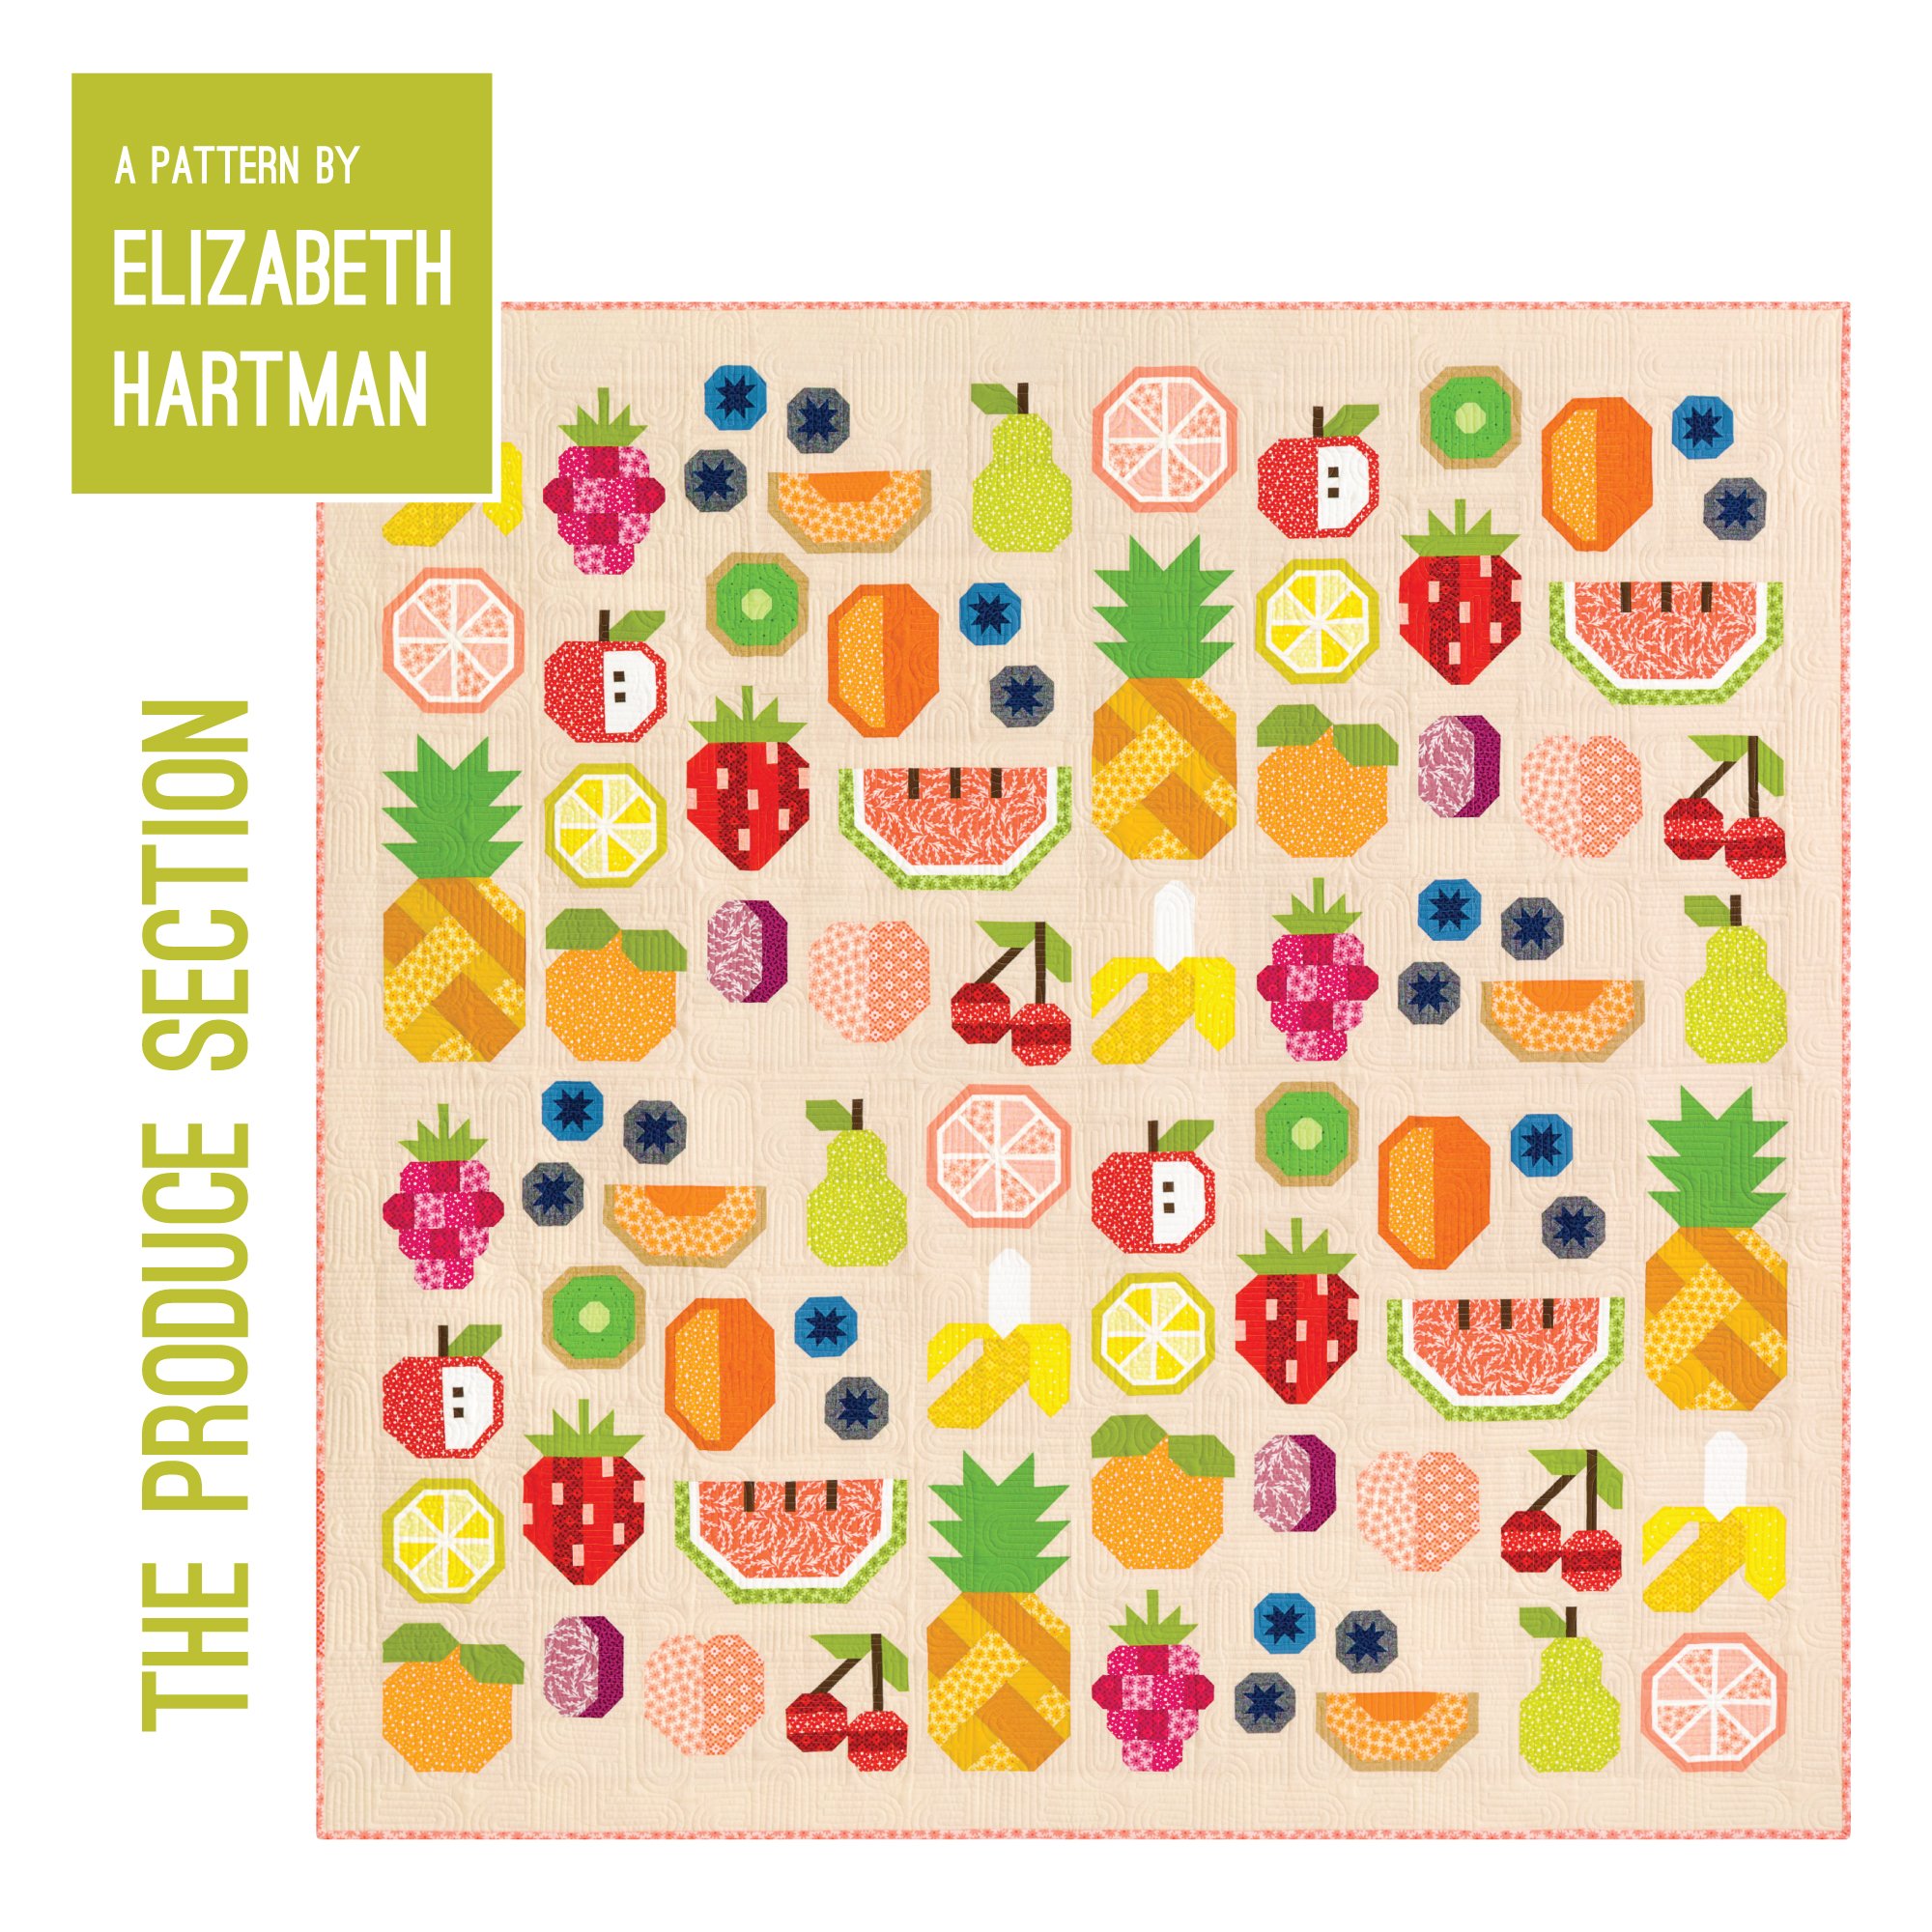 Elizabeth Hartman Patterns